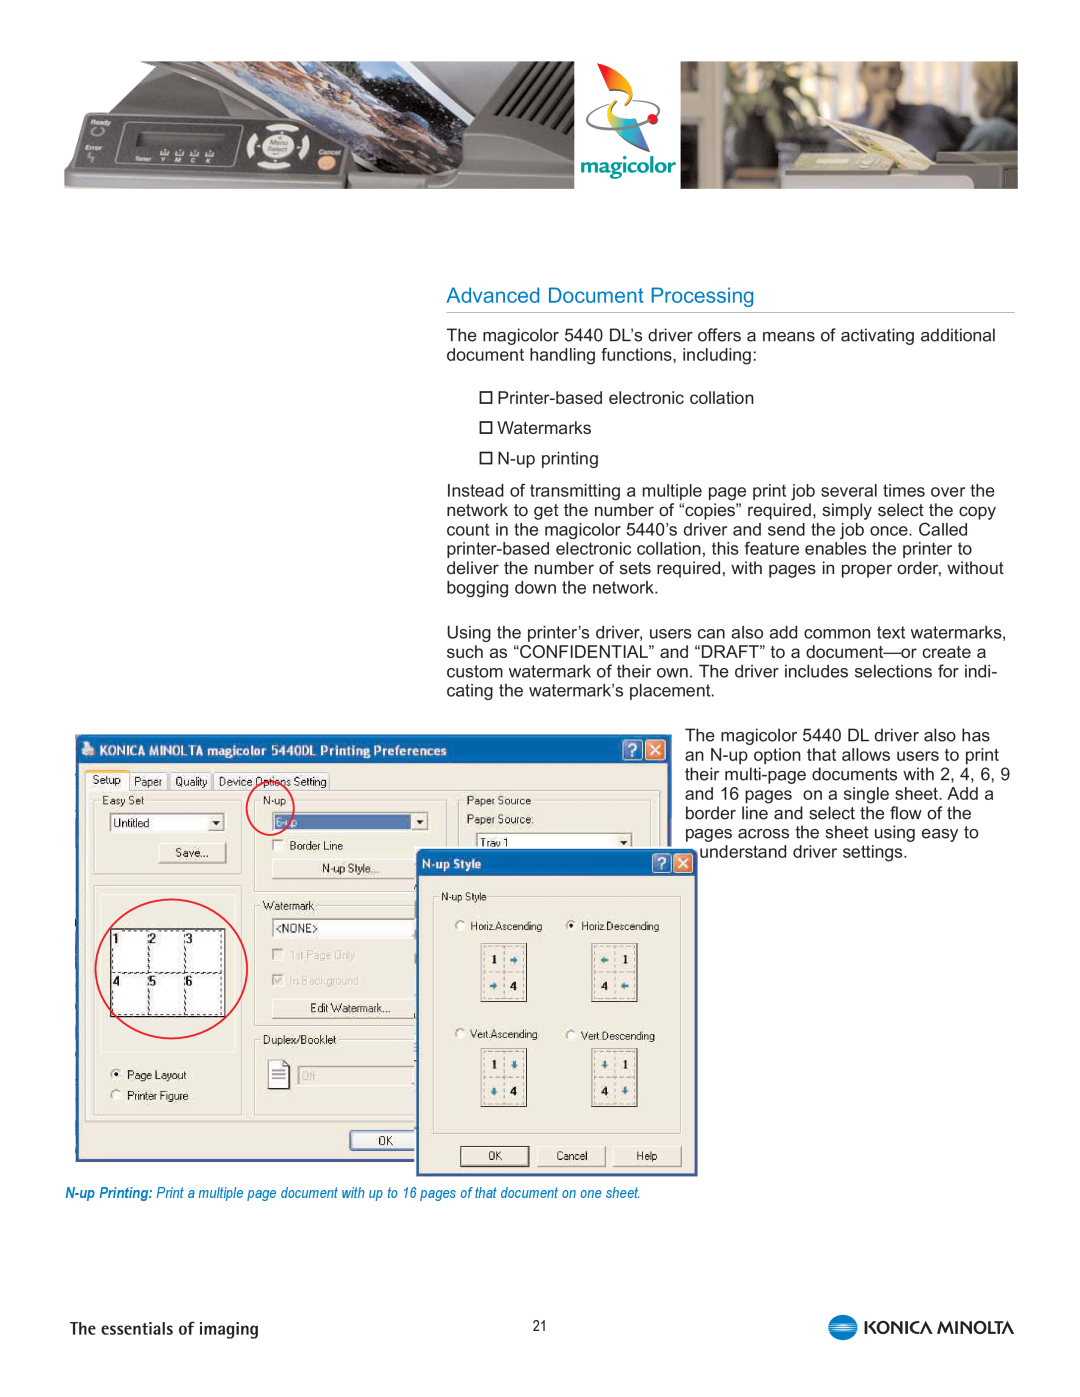 Konica Minolta 5440 DL manual Advanced Document Processing 